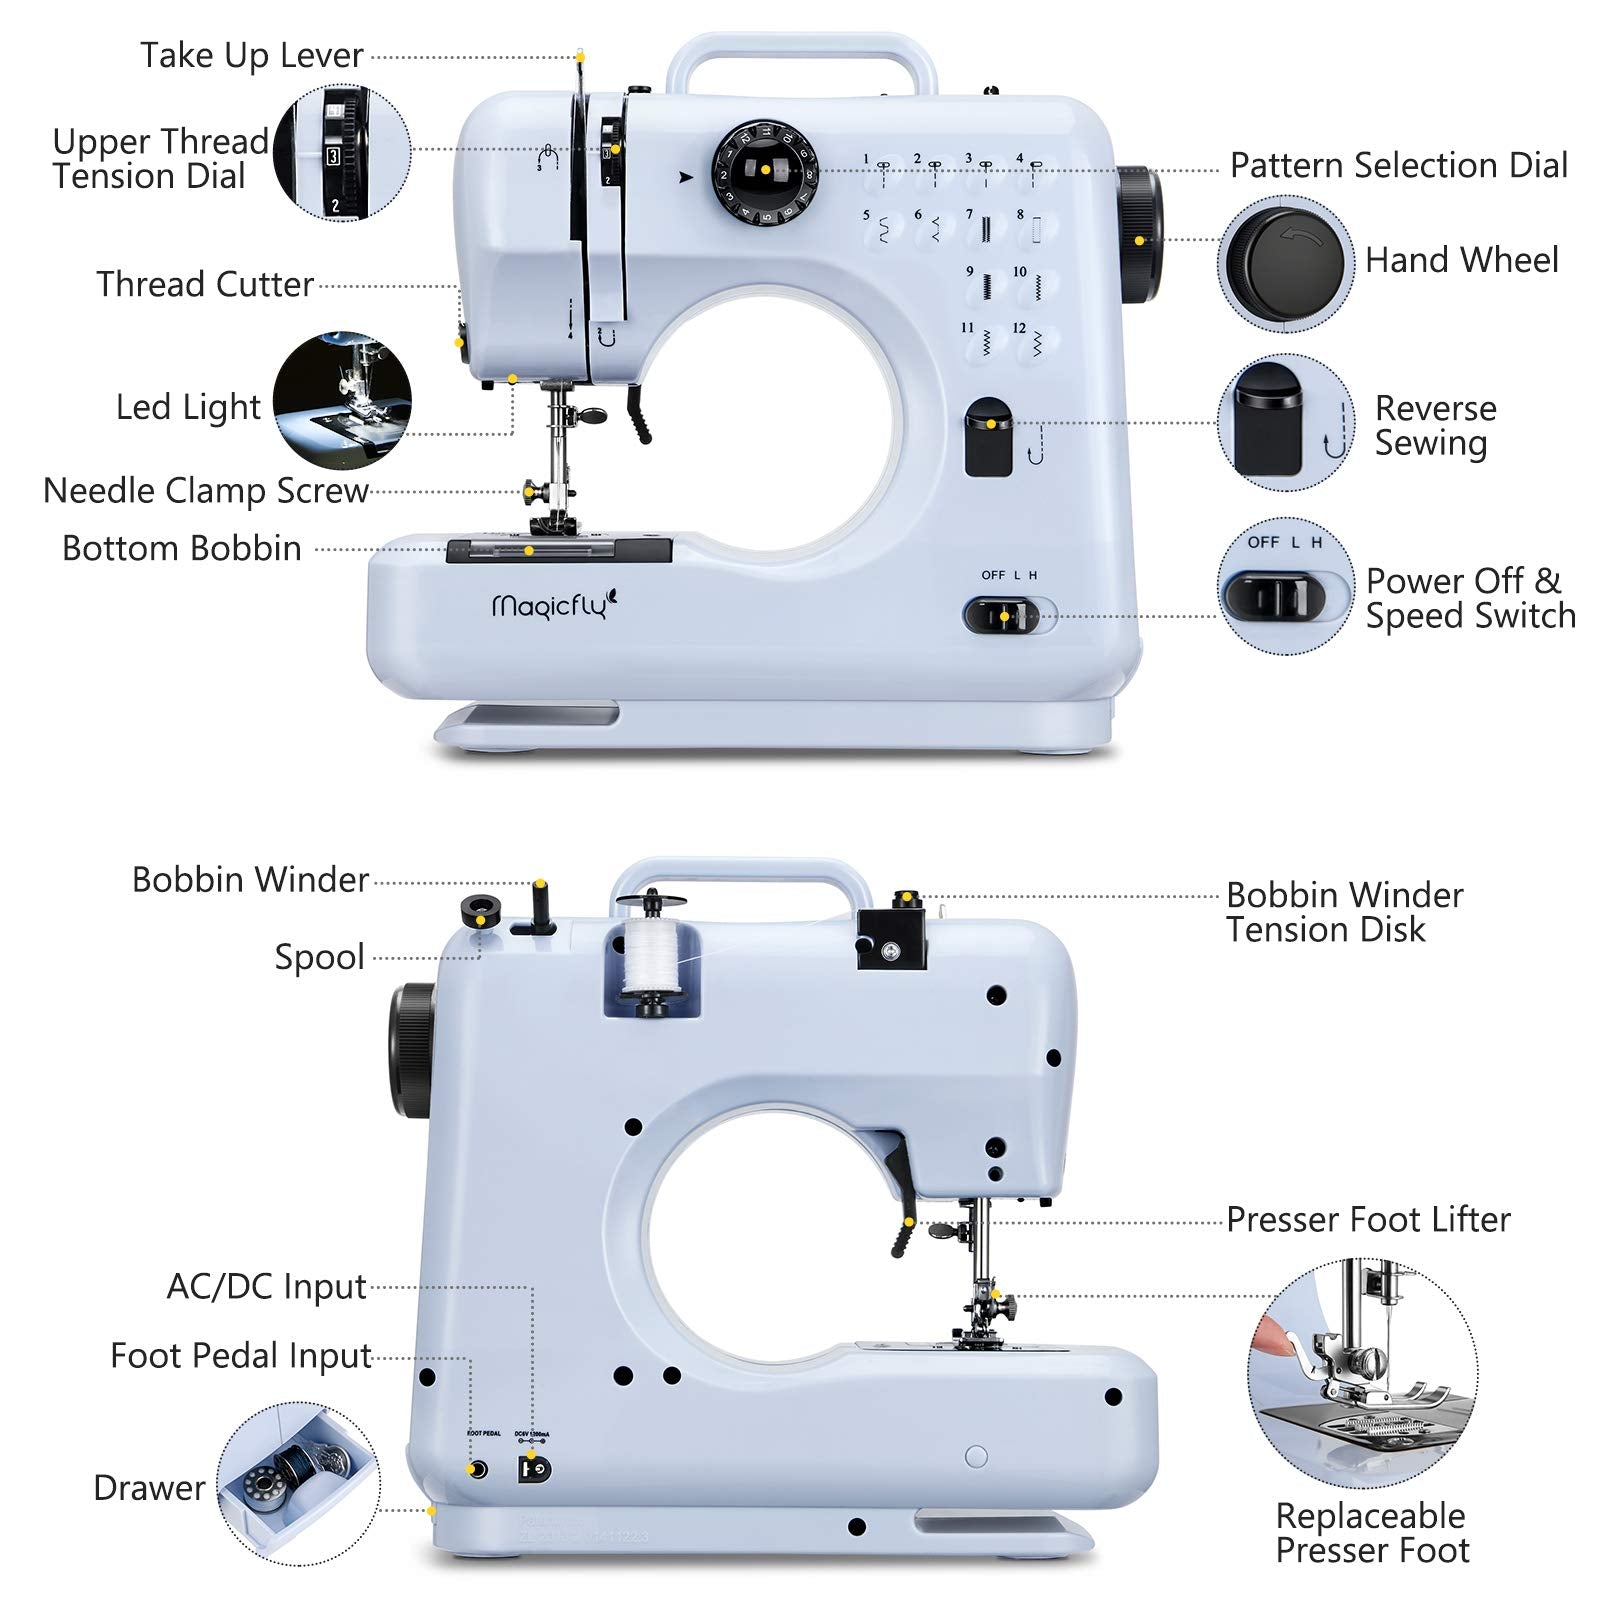 Magicfly Portable Sewing Machine  12 Stitches Mini Sewing Machine